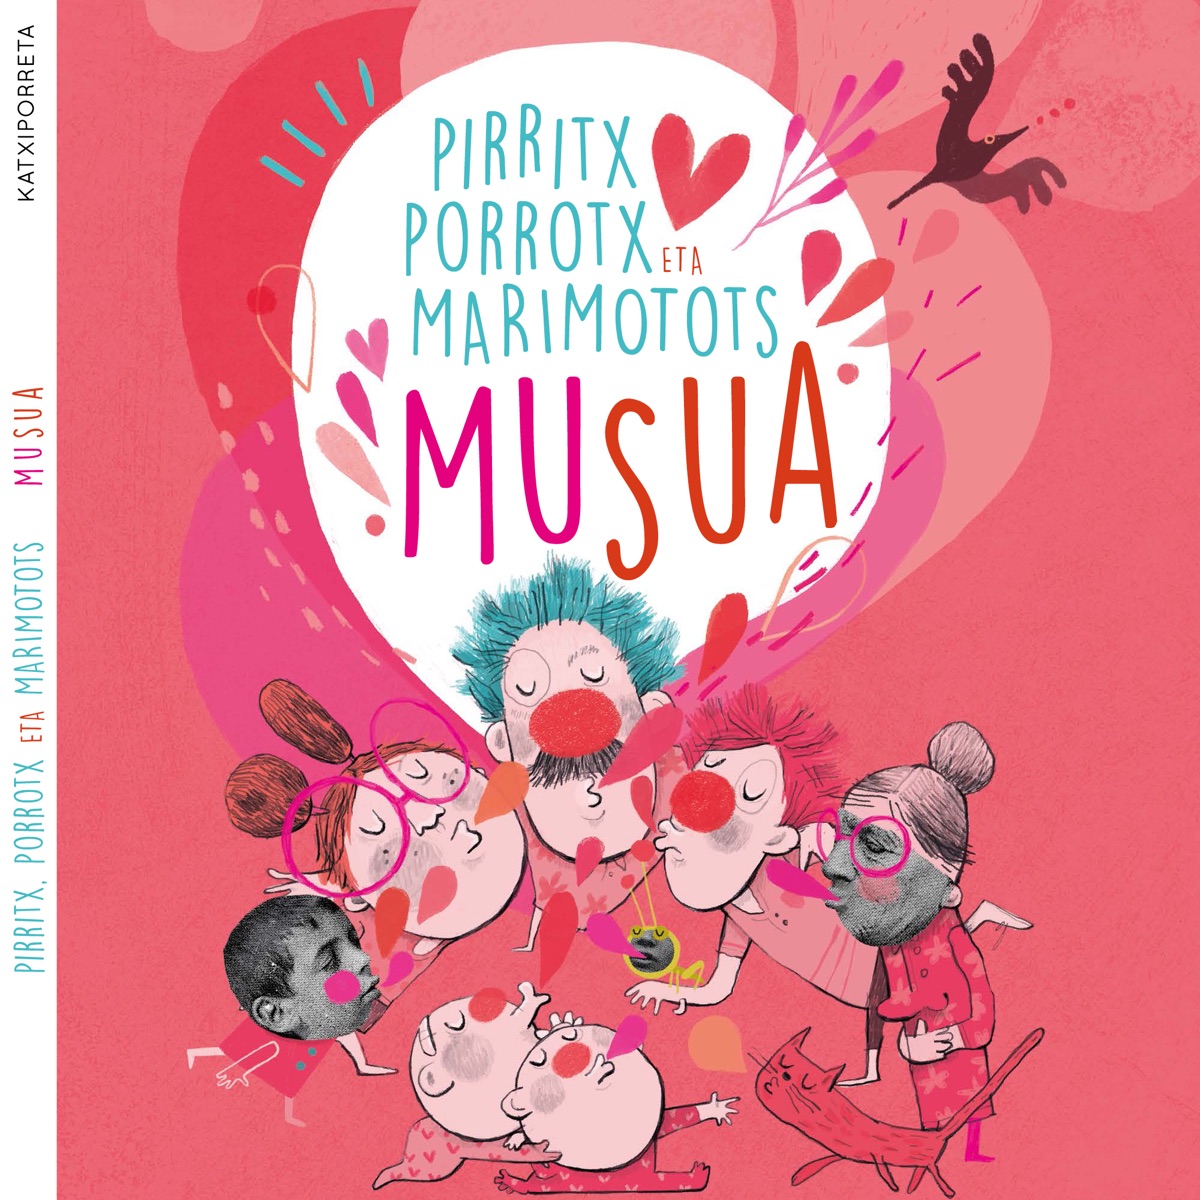 Musua by Pirritx, Porrotx eta MariMotots on Apple Music